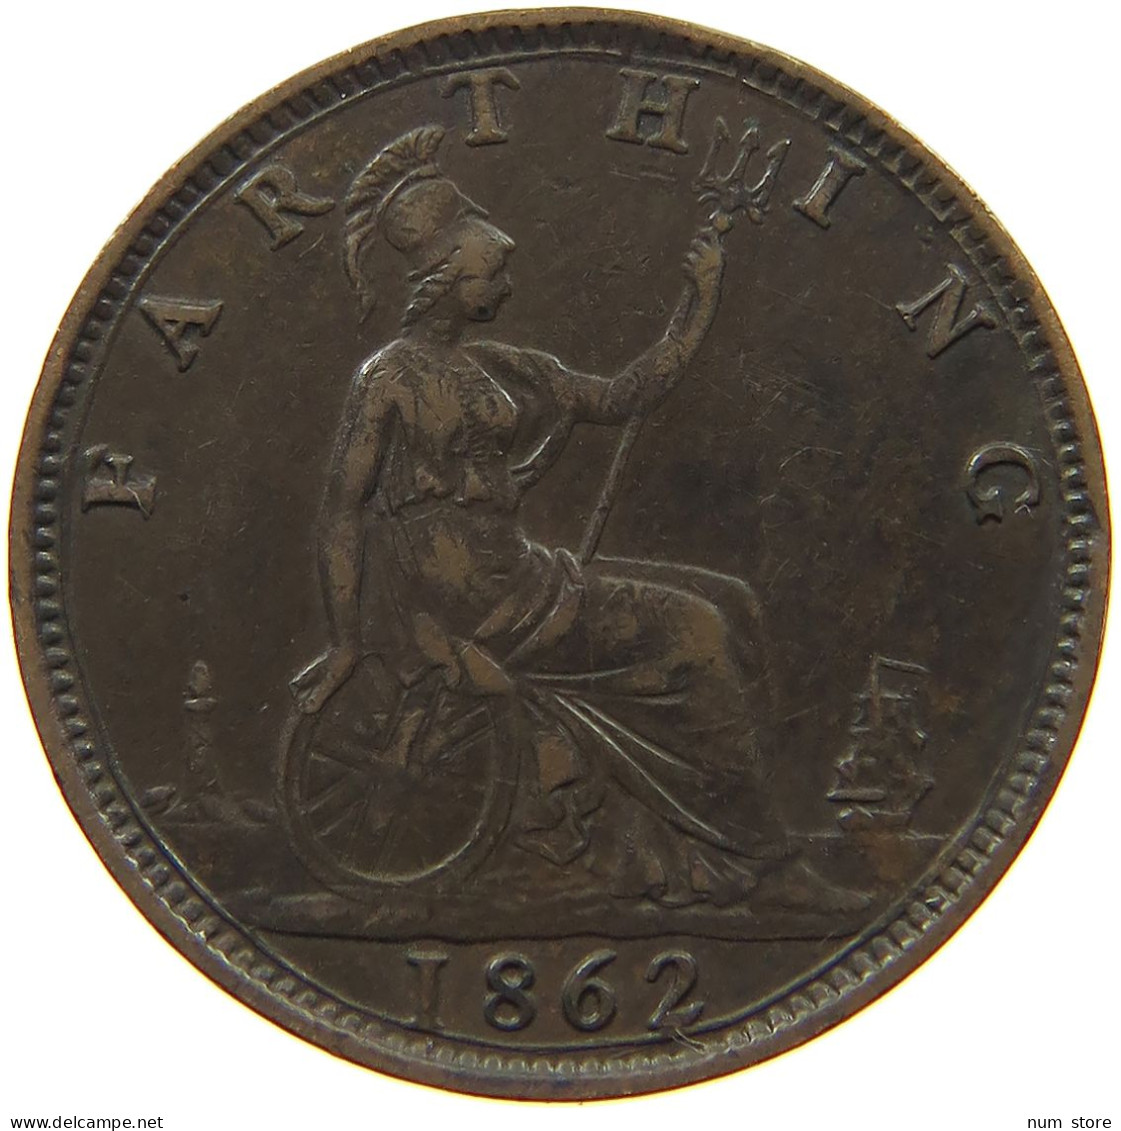 GREAT BRITAIN FARTHING 1862 Victoria 1837-1901 #t149 0269 - B. 1 Farthing